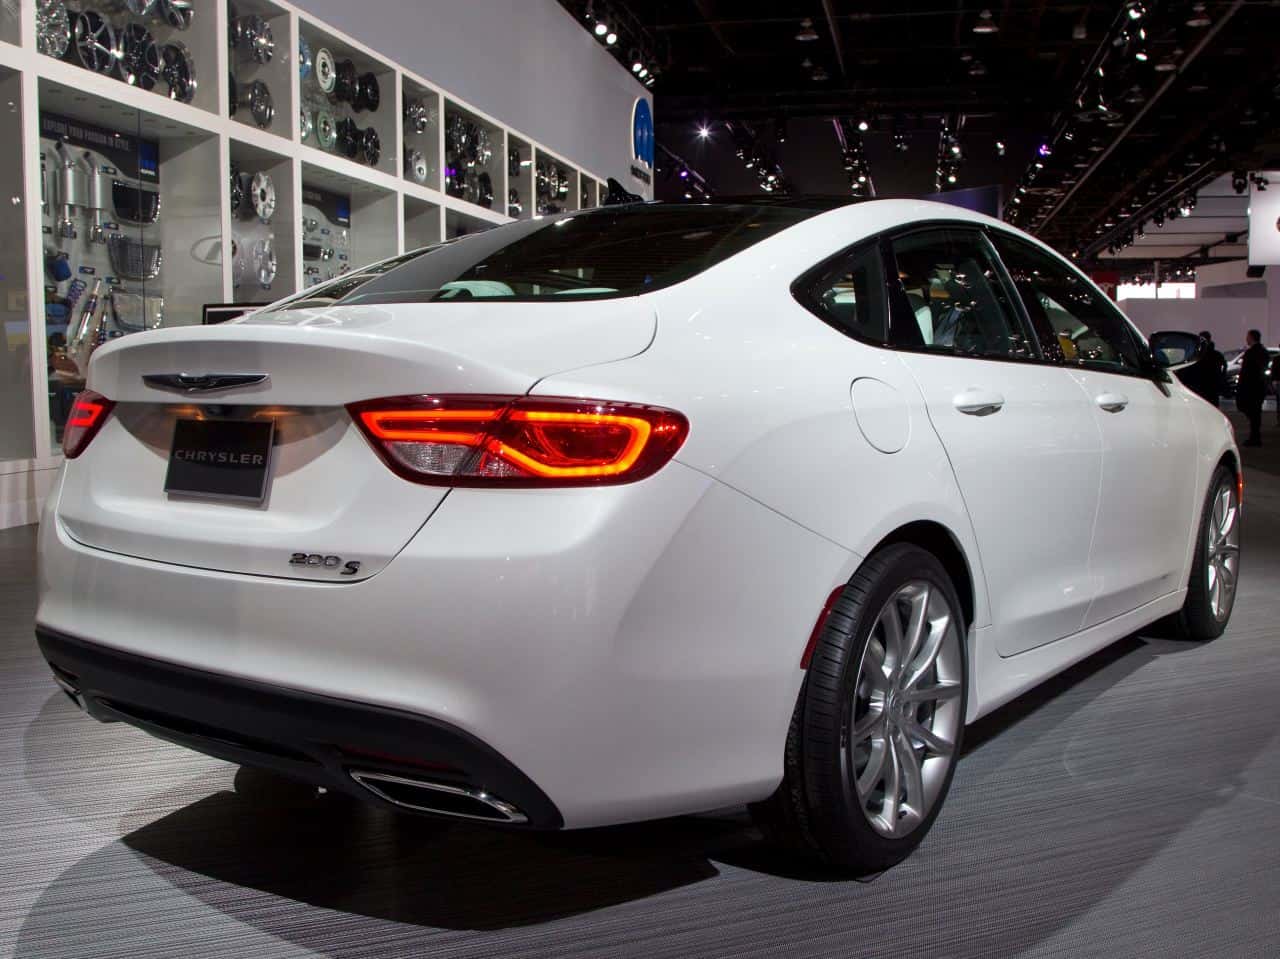 Meet the Designers: 2015 Chrysler 200